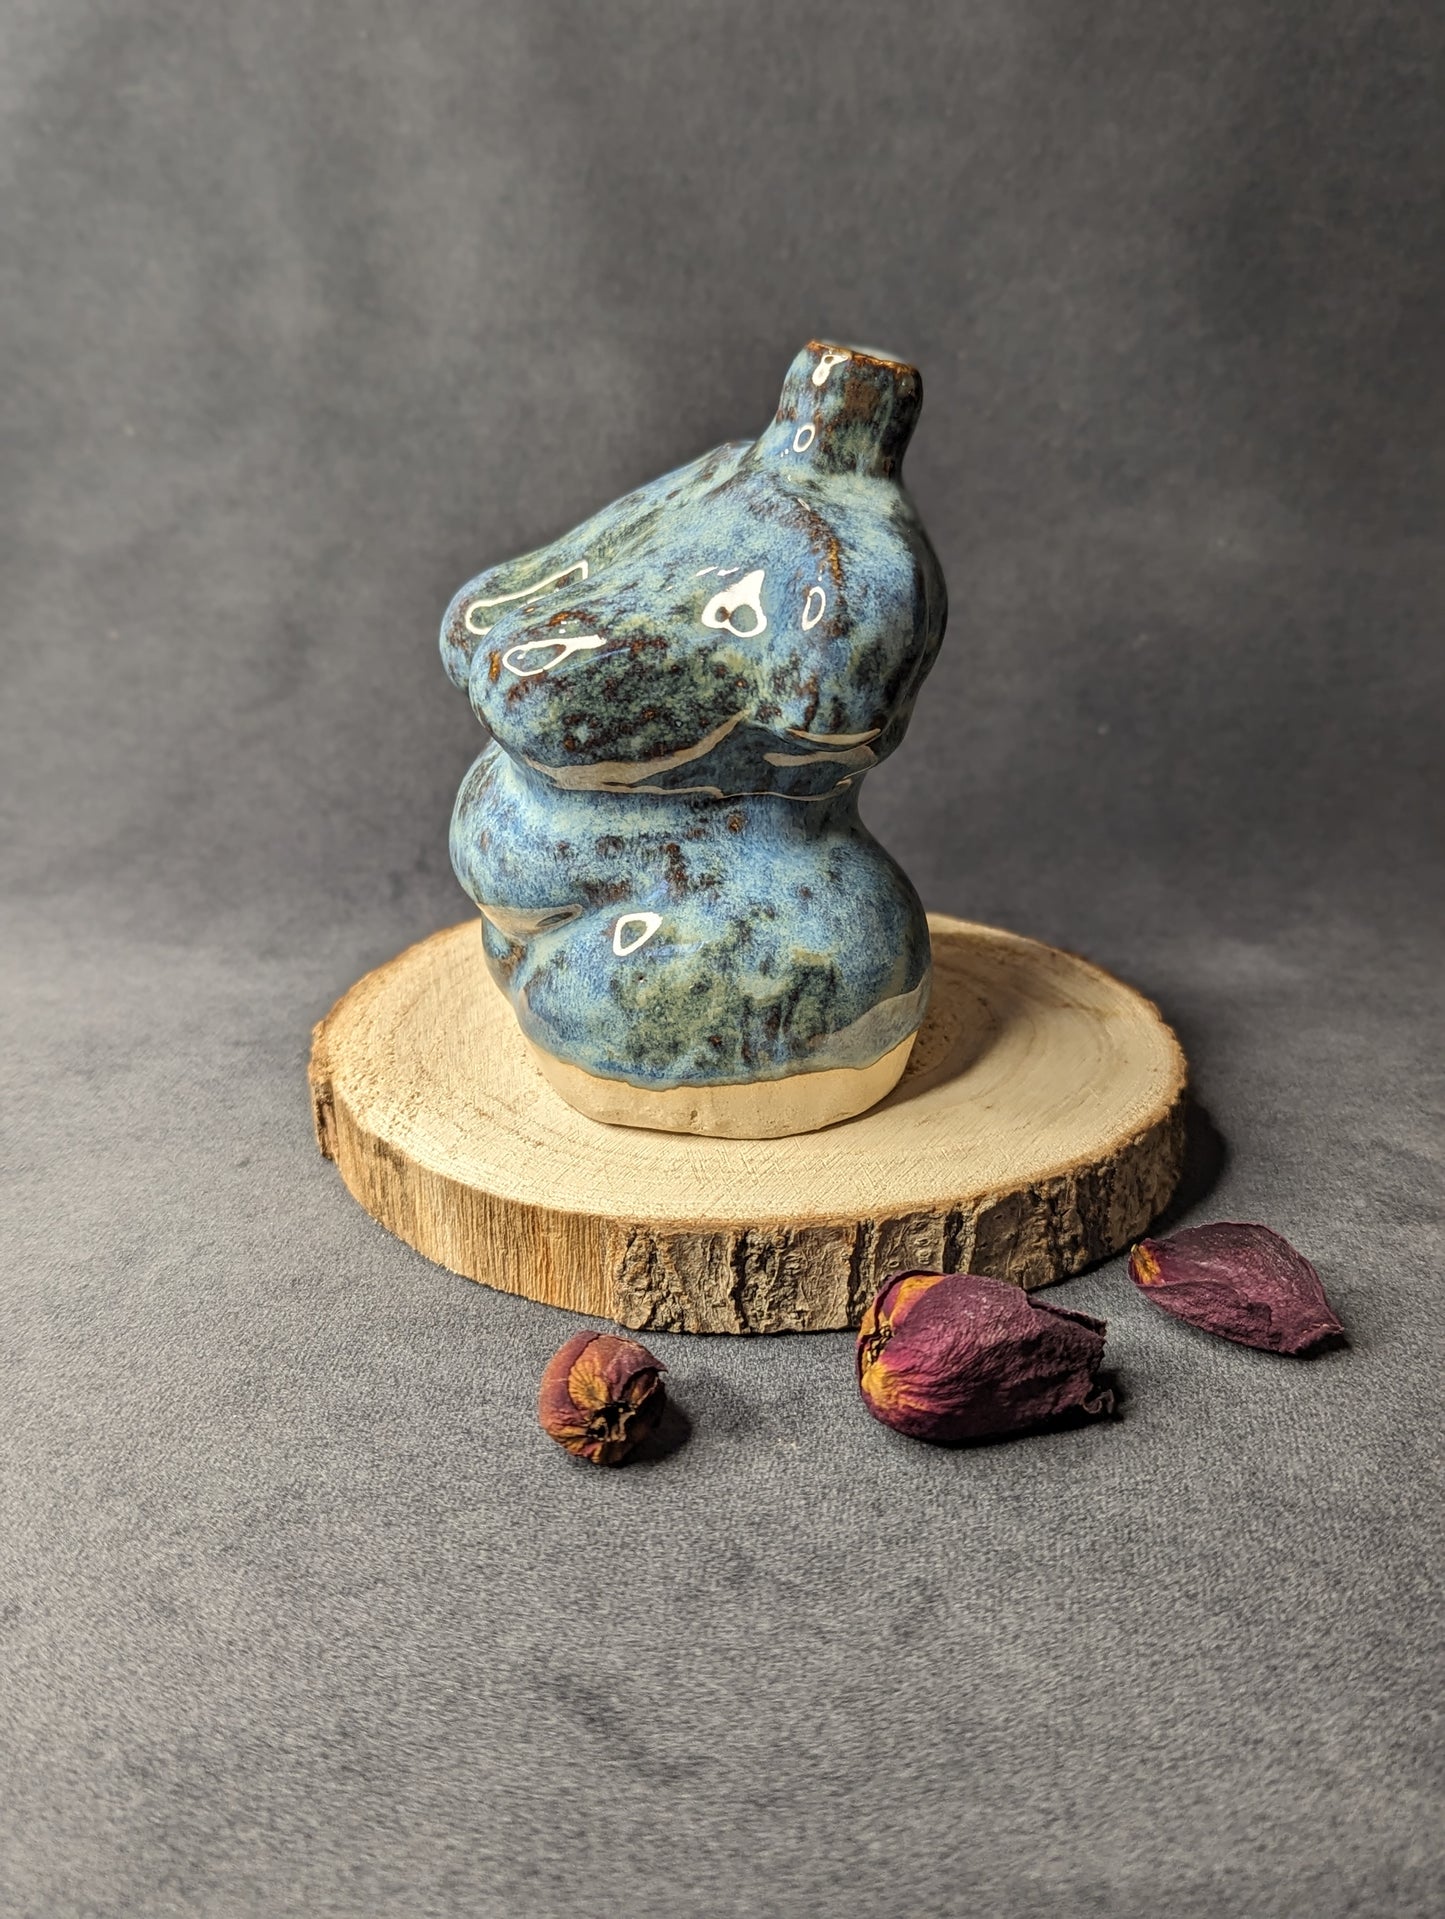 The High Priestess Ceramic Ornament by Genuine Quirk